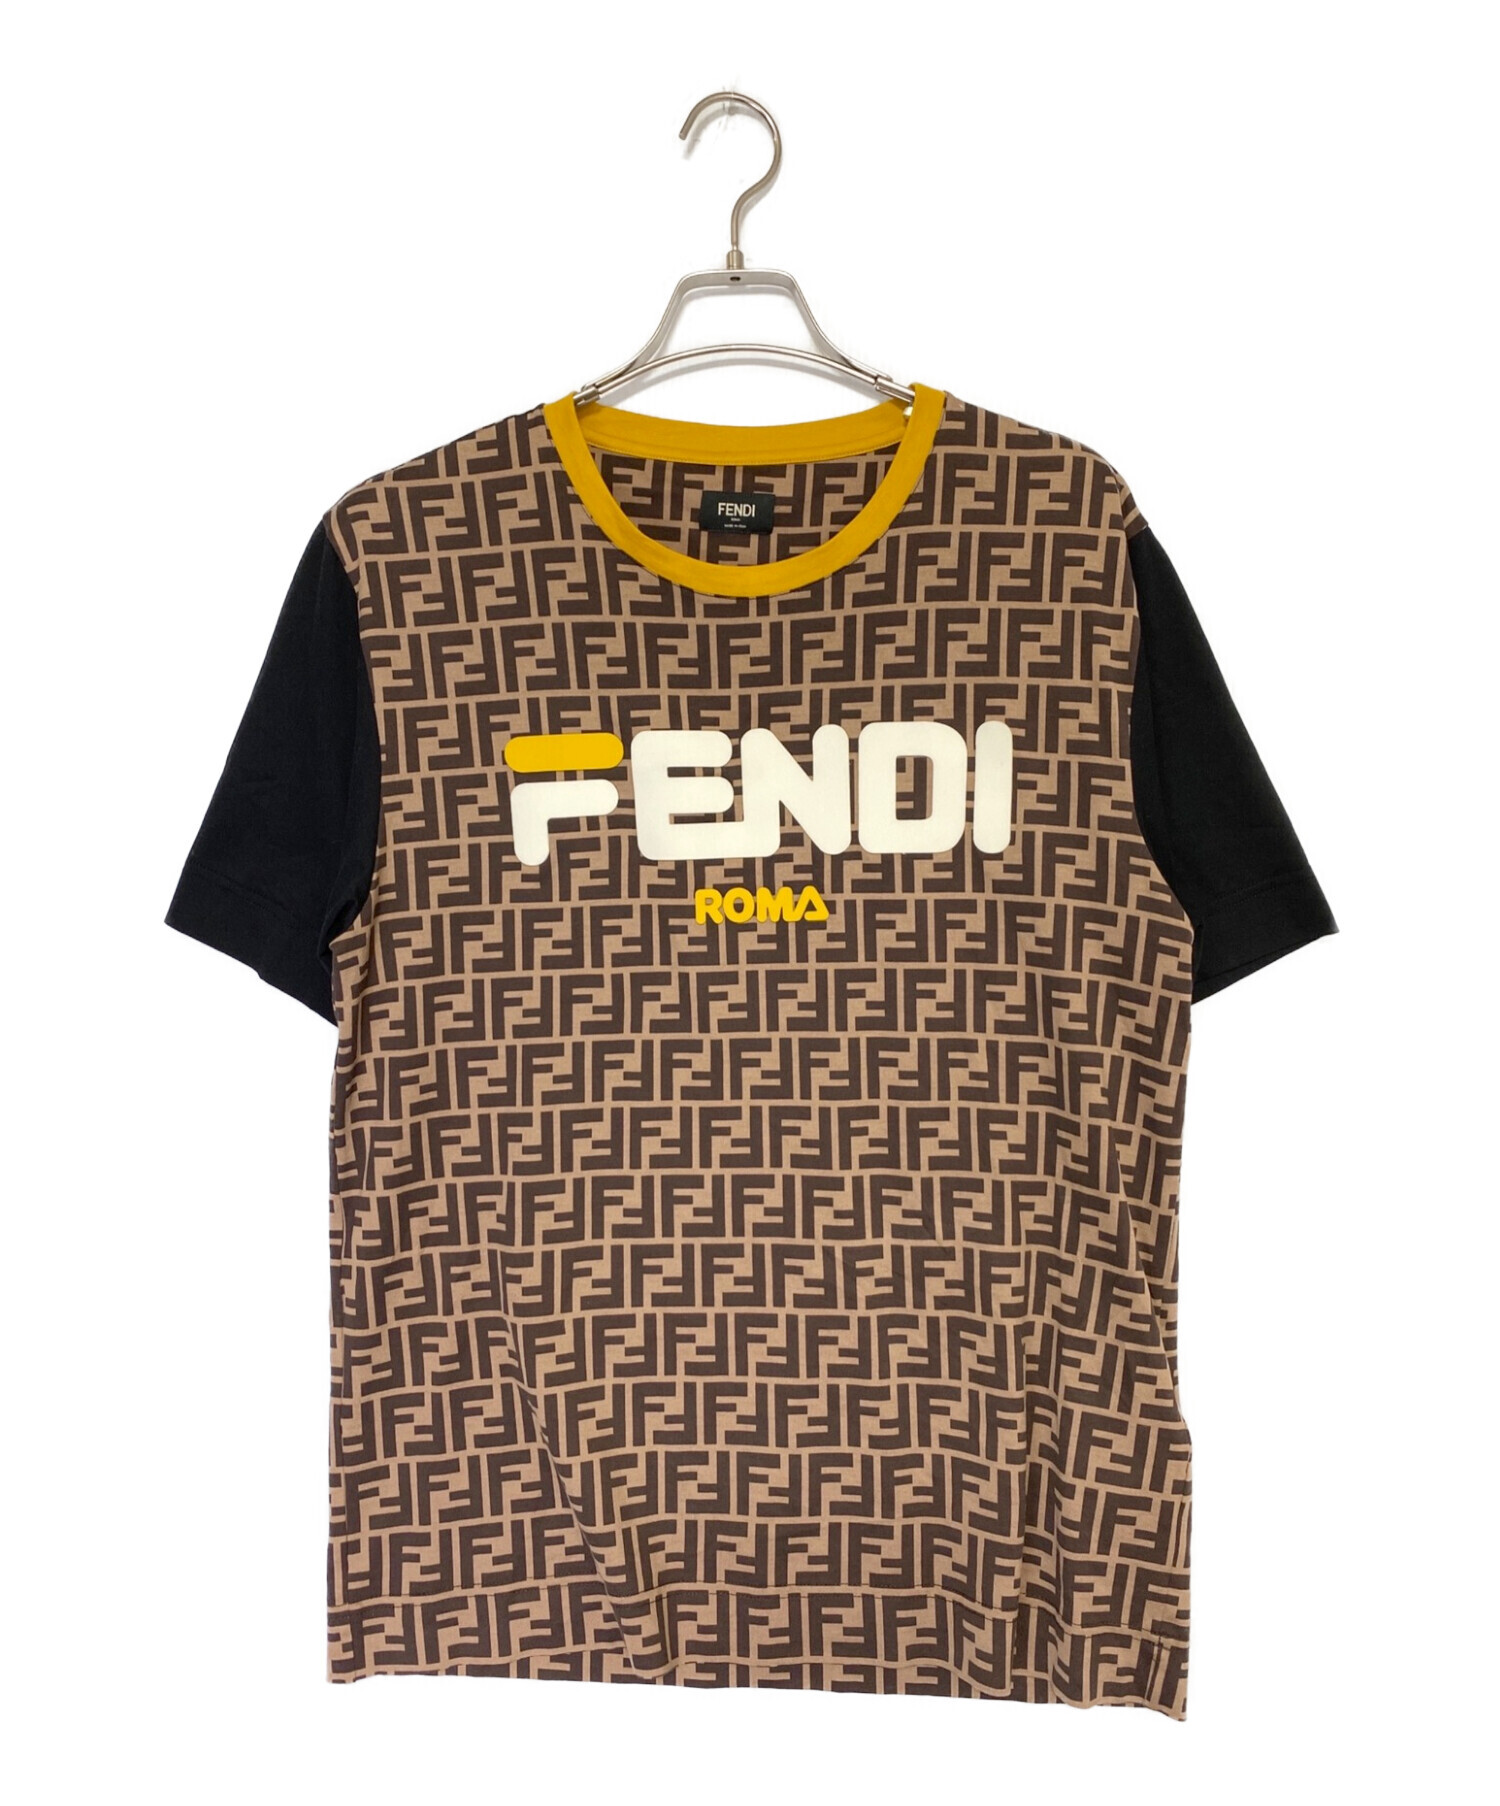 FENDI (フェンディ) Tシャツ サイズ:XS